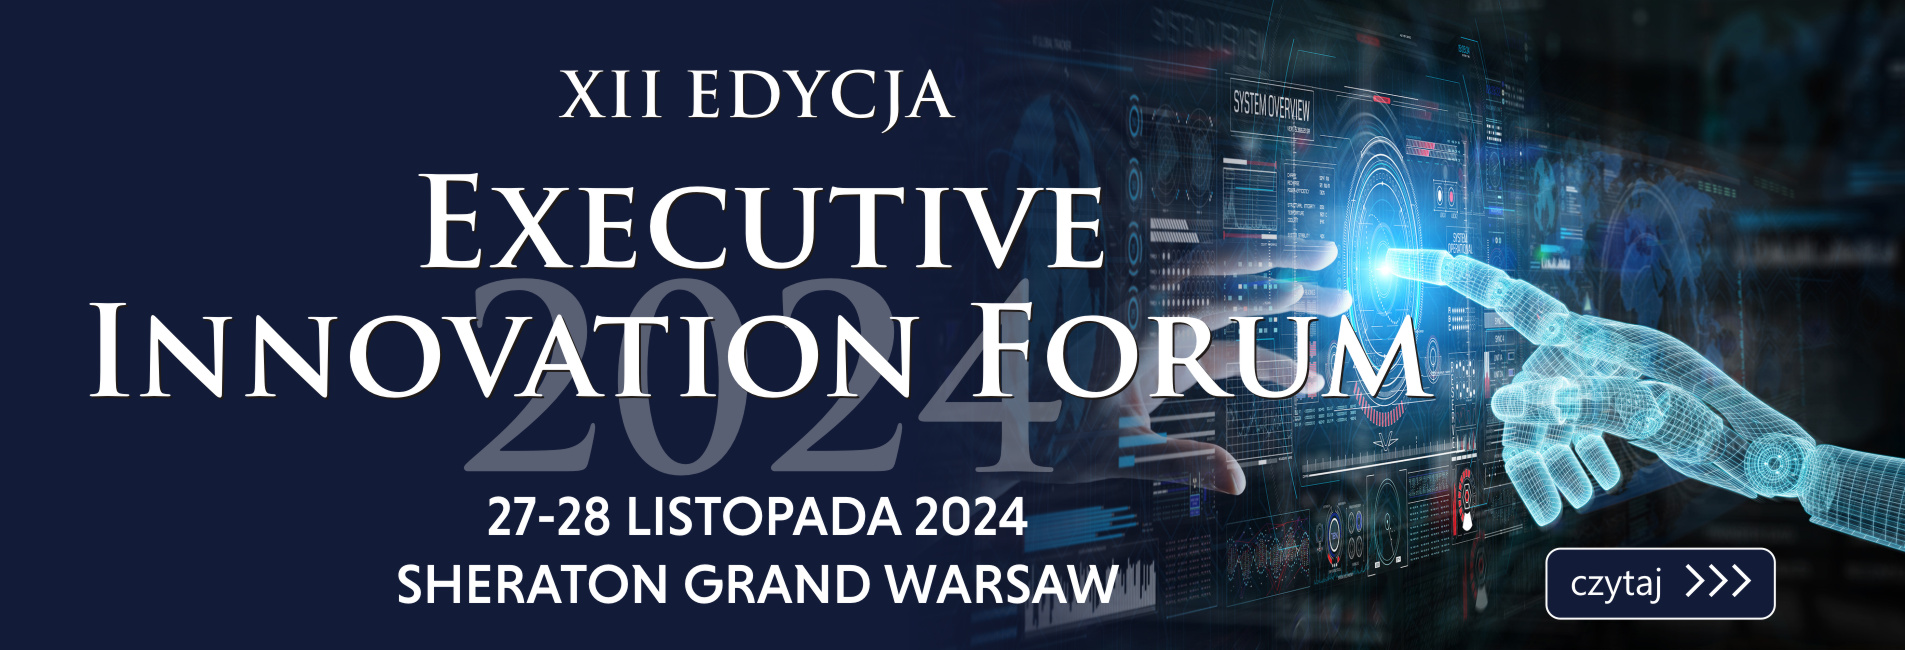 Executive Innovation Forum 2024